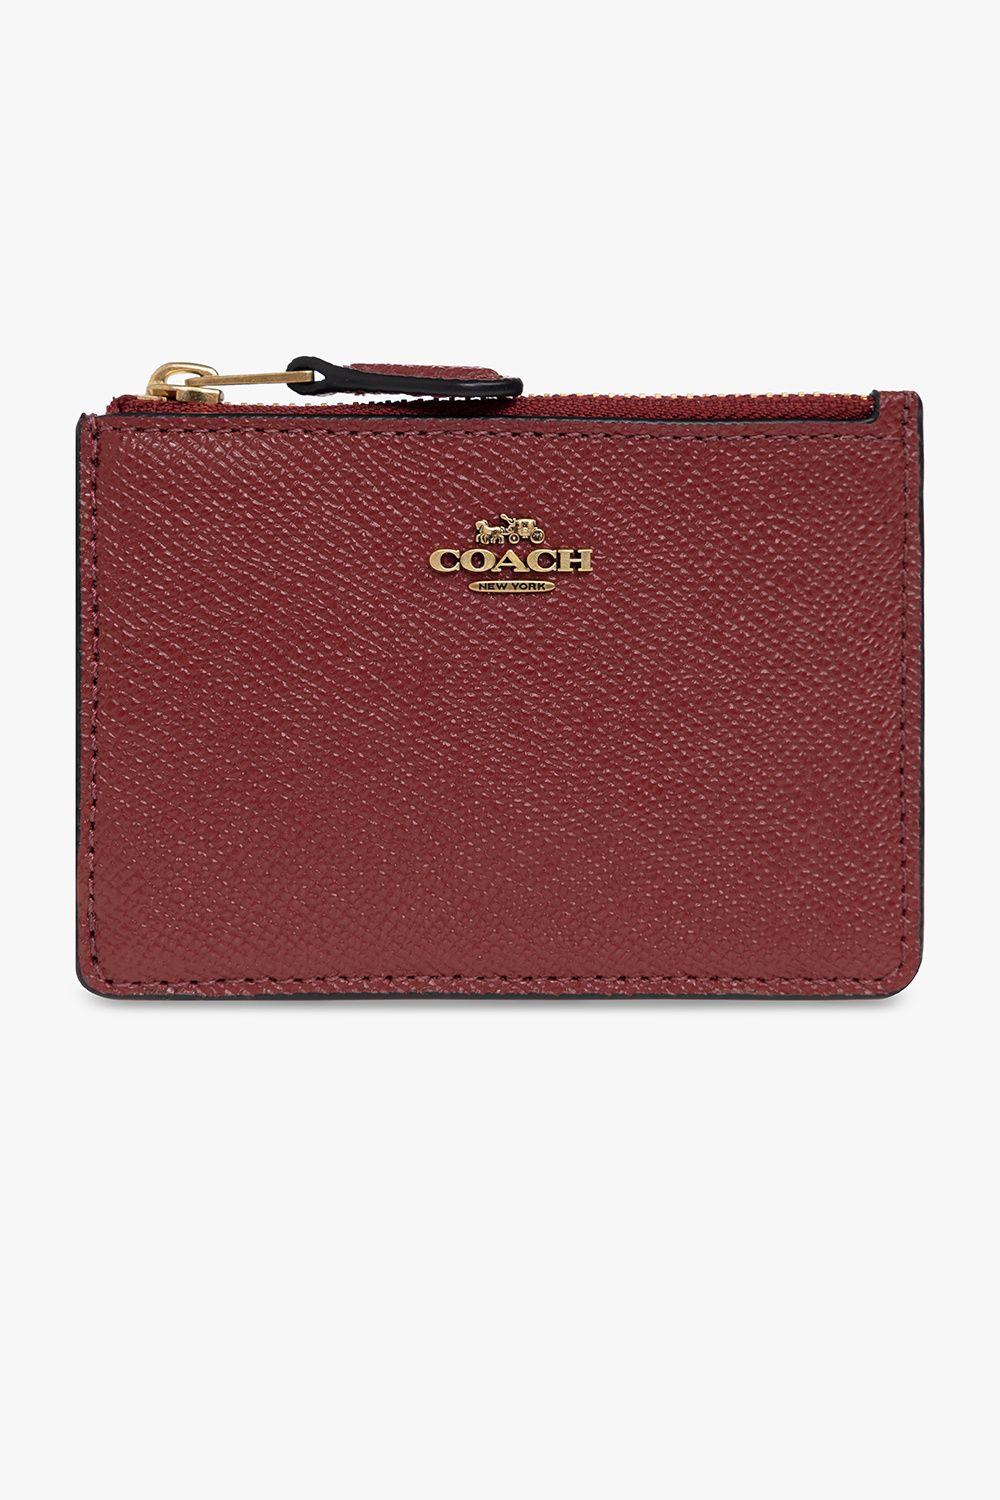 Brown Coach Monogram Wallet/Credit Card Holder, Red Monogram Purse